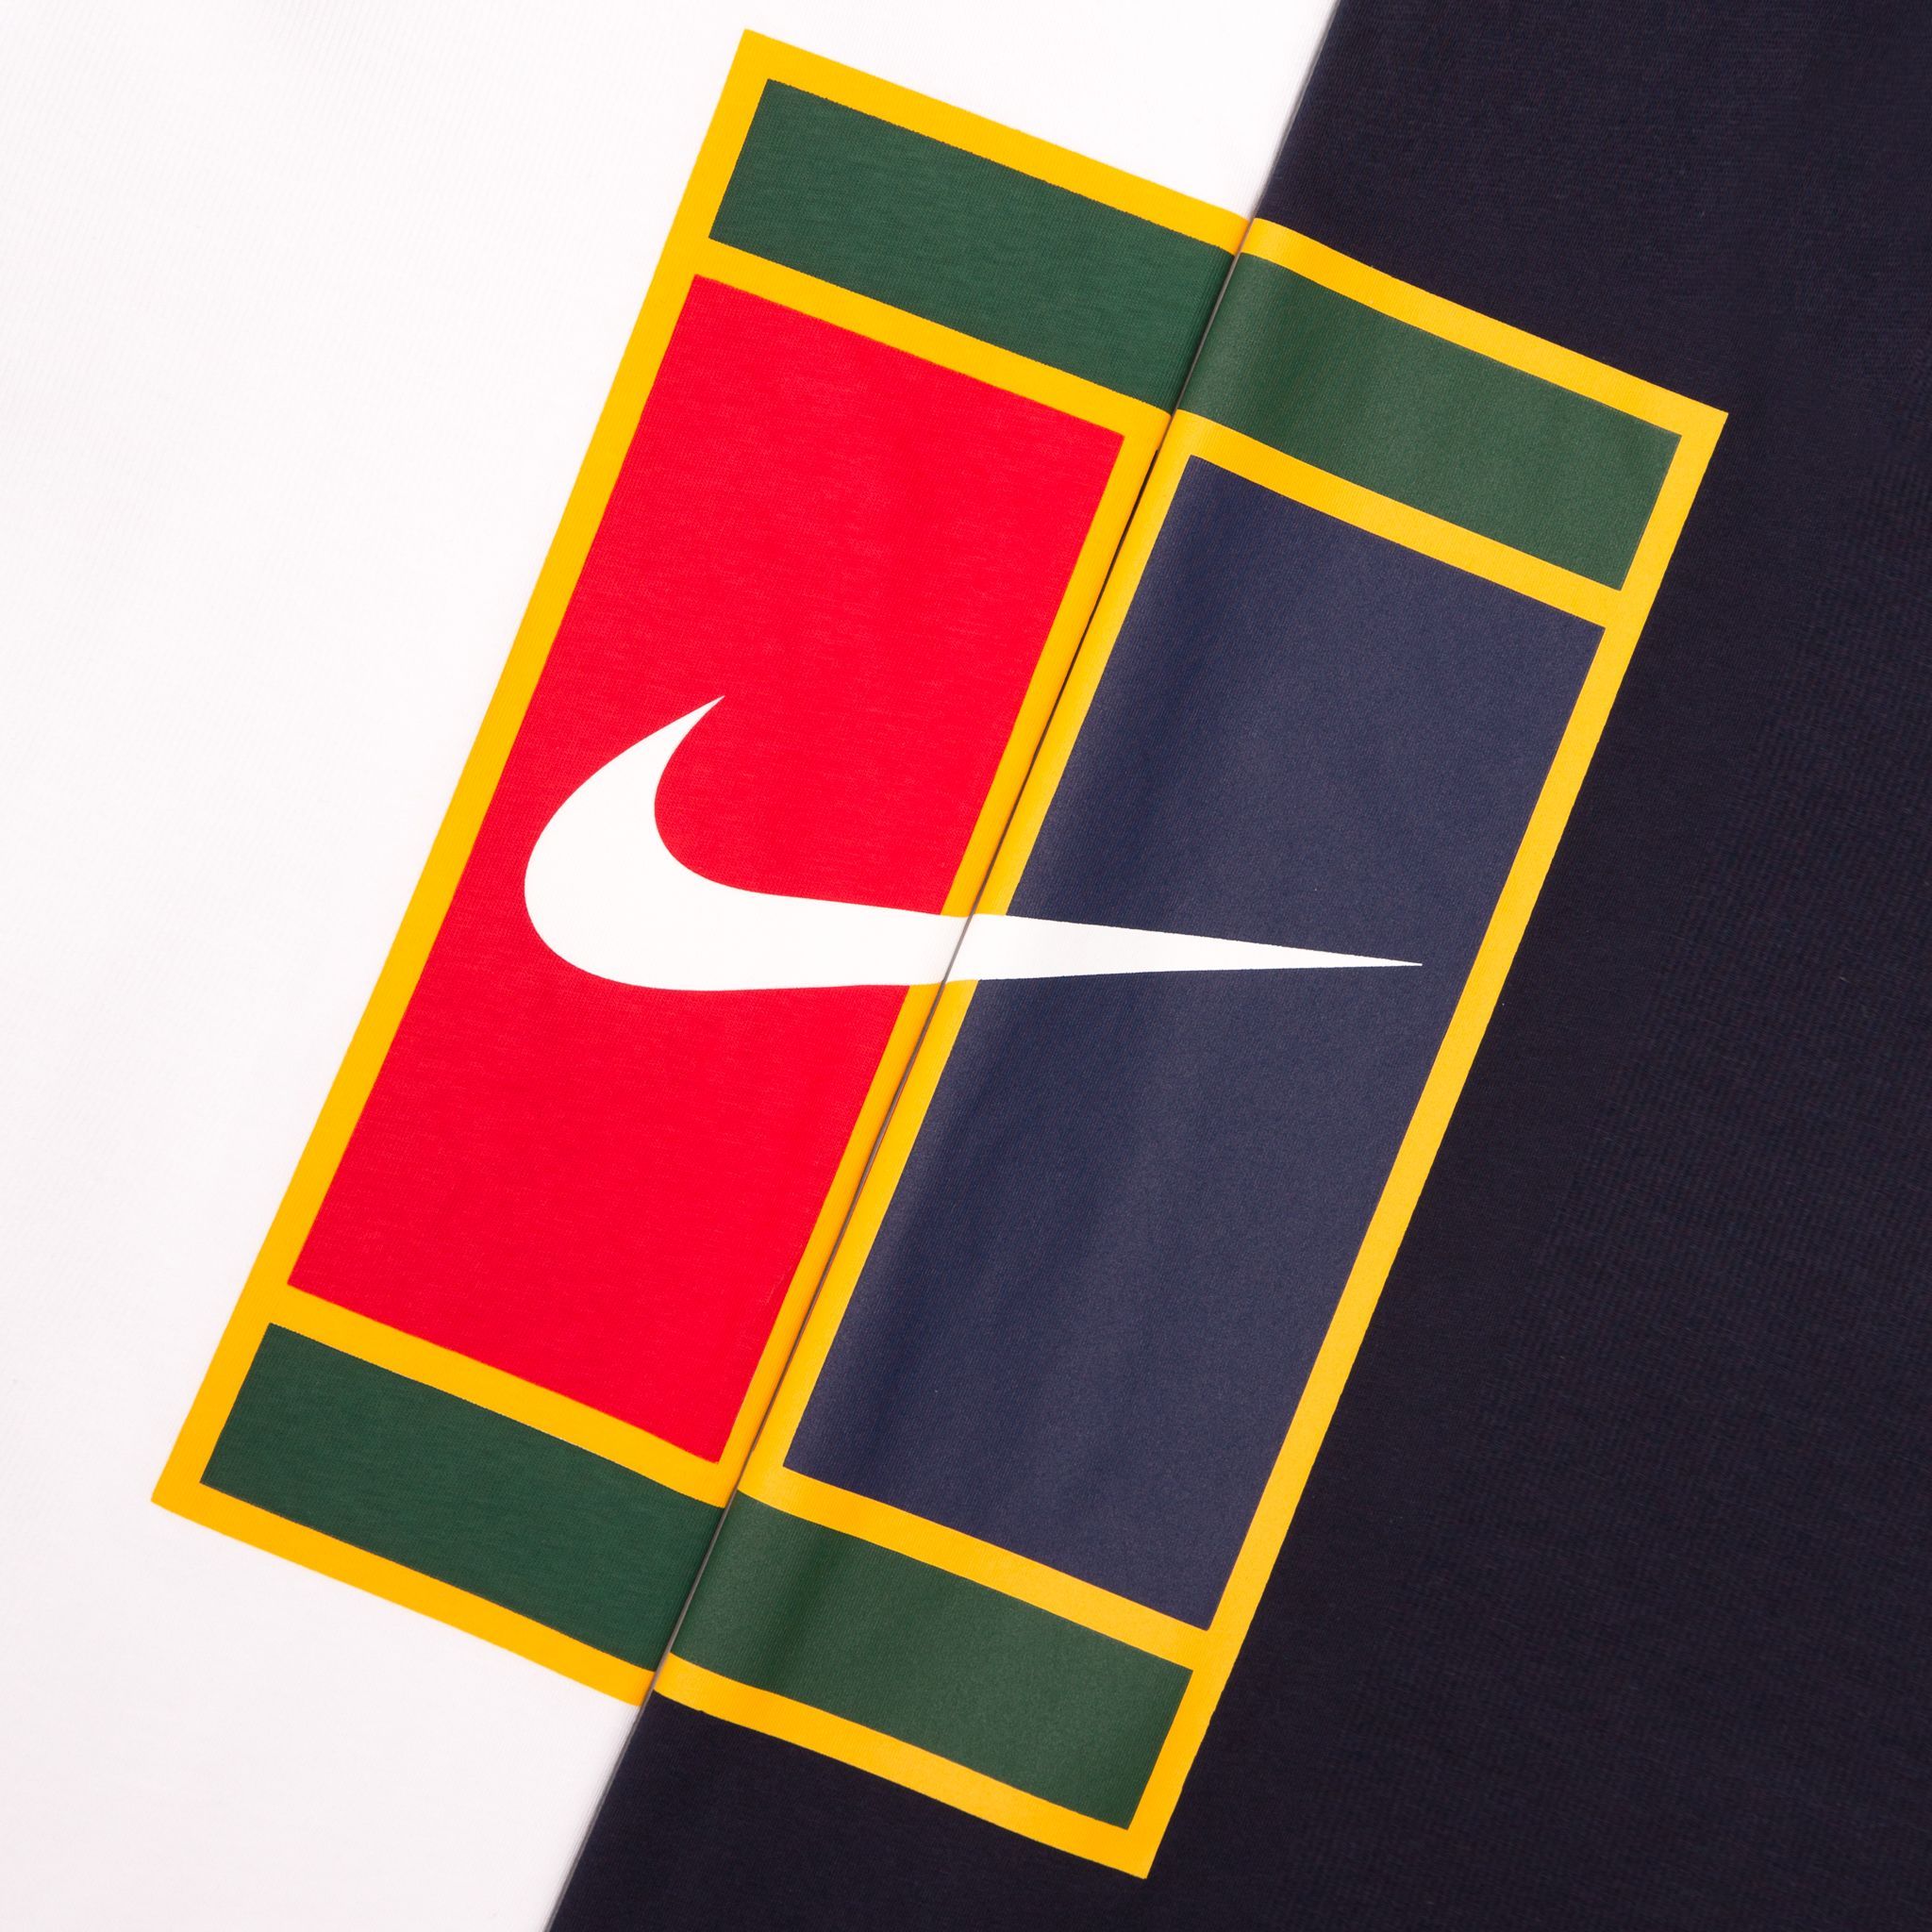 Mala fe Asimilación Estrecho de Bering Titolo on Twitter: "ready to hit the courts? 🎾 Nike Tee Heritage Logo shop  now ➡️ https://t.co/hKA3o0P9ql #nike #apparel #niketennis #court #tennis  #heritage #logo #niketalk https://t.co/KJGOg0RiFk" / Twitter